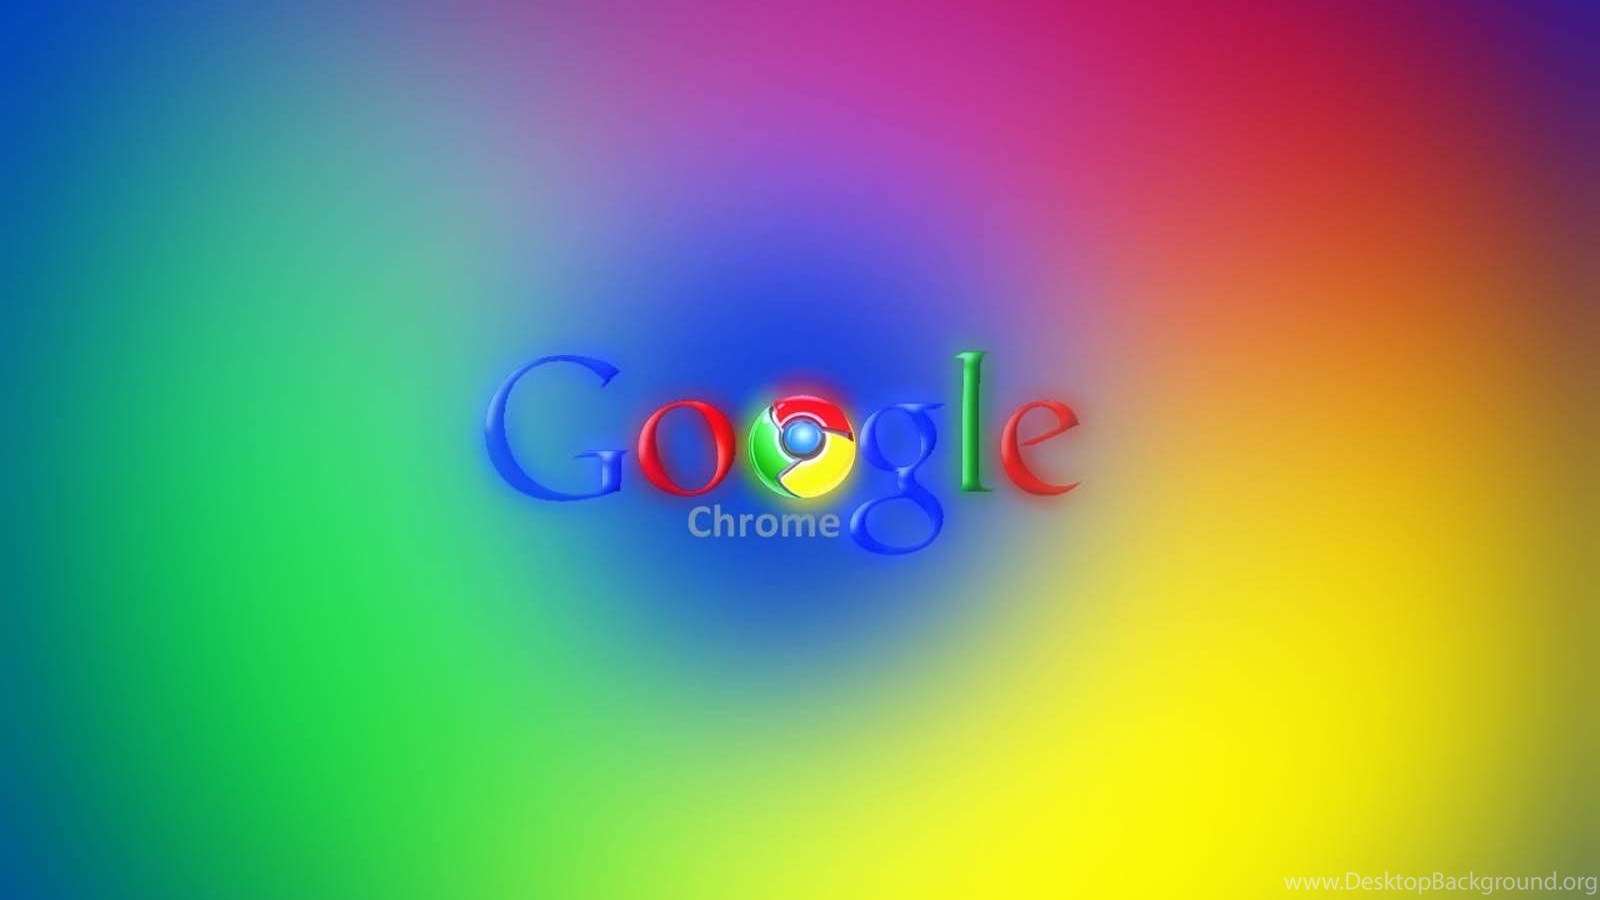 GOOGLE CHROME Computer Logo Poster Wallpaper Desktop Background